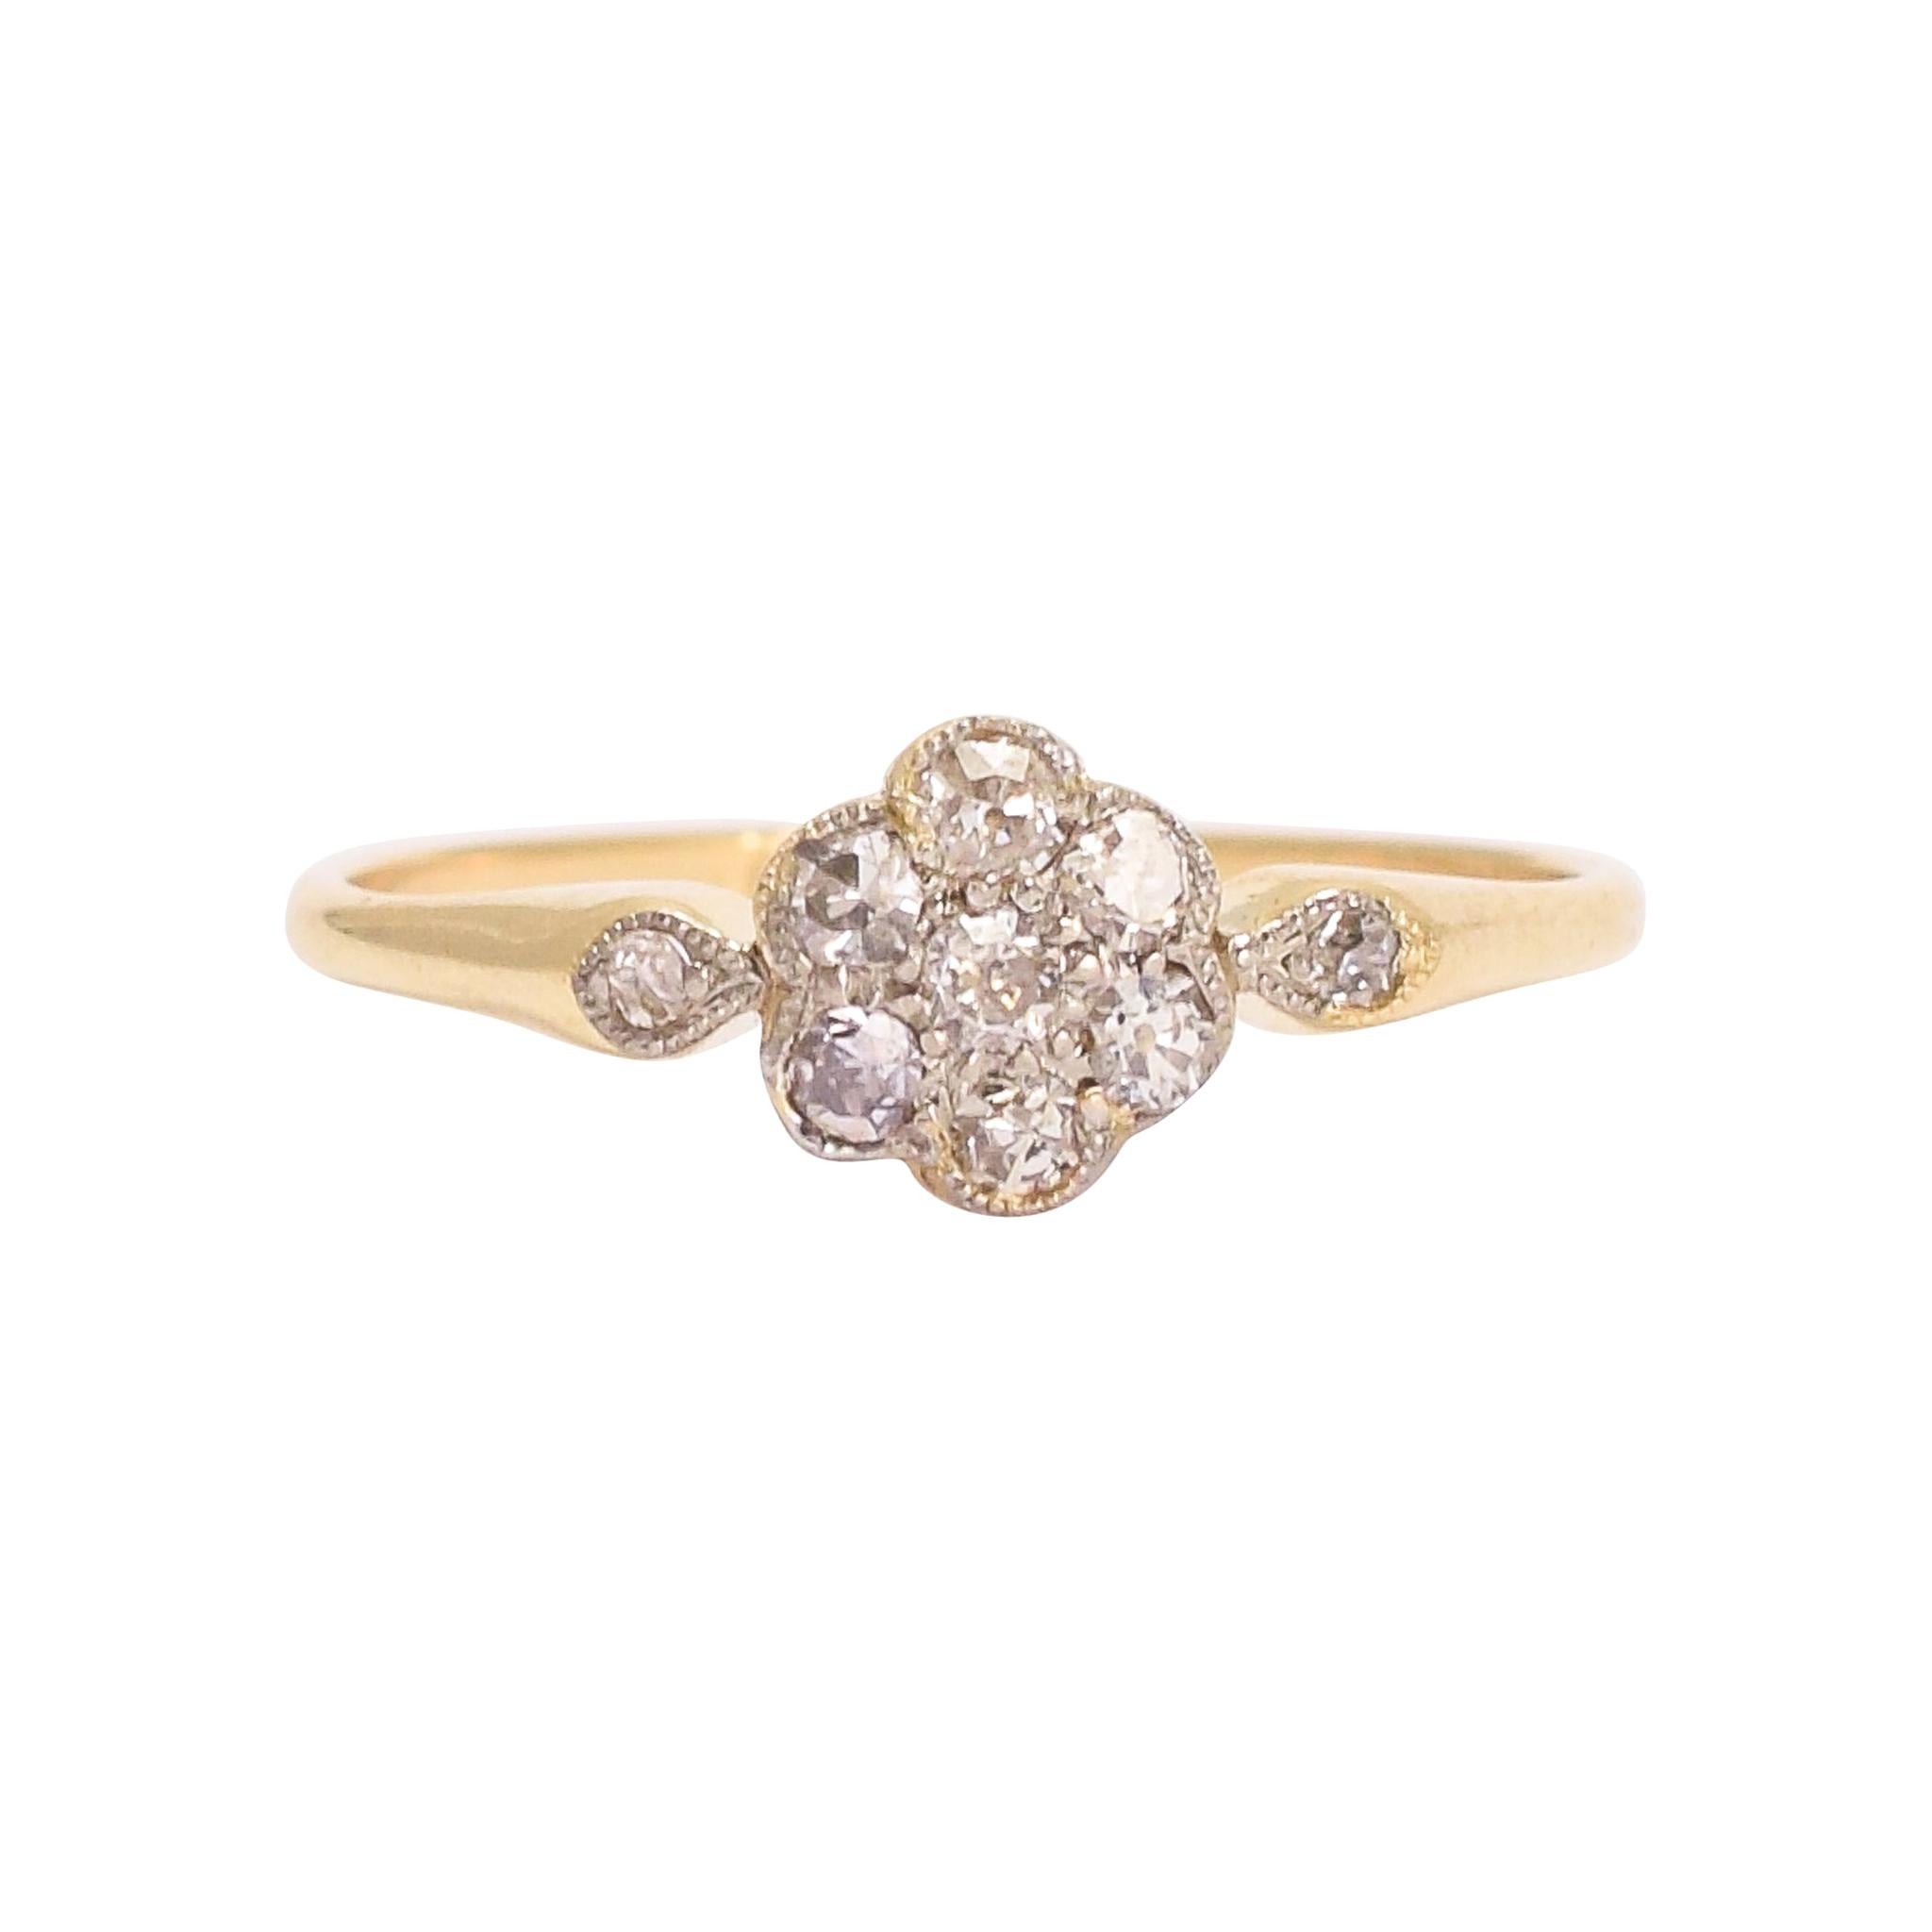 Antique Edwardian Diamond Daisy Ring